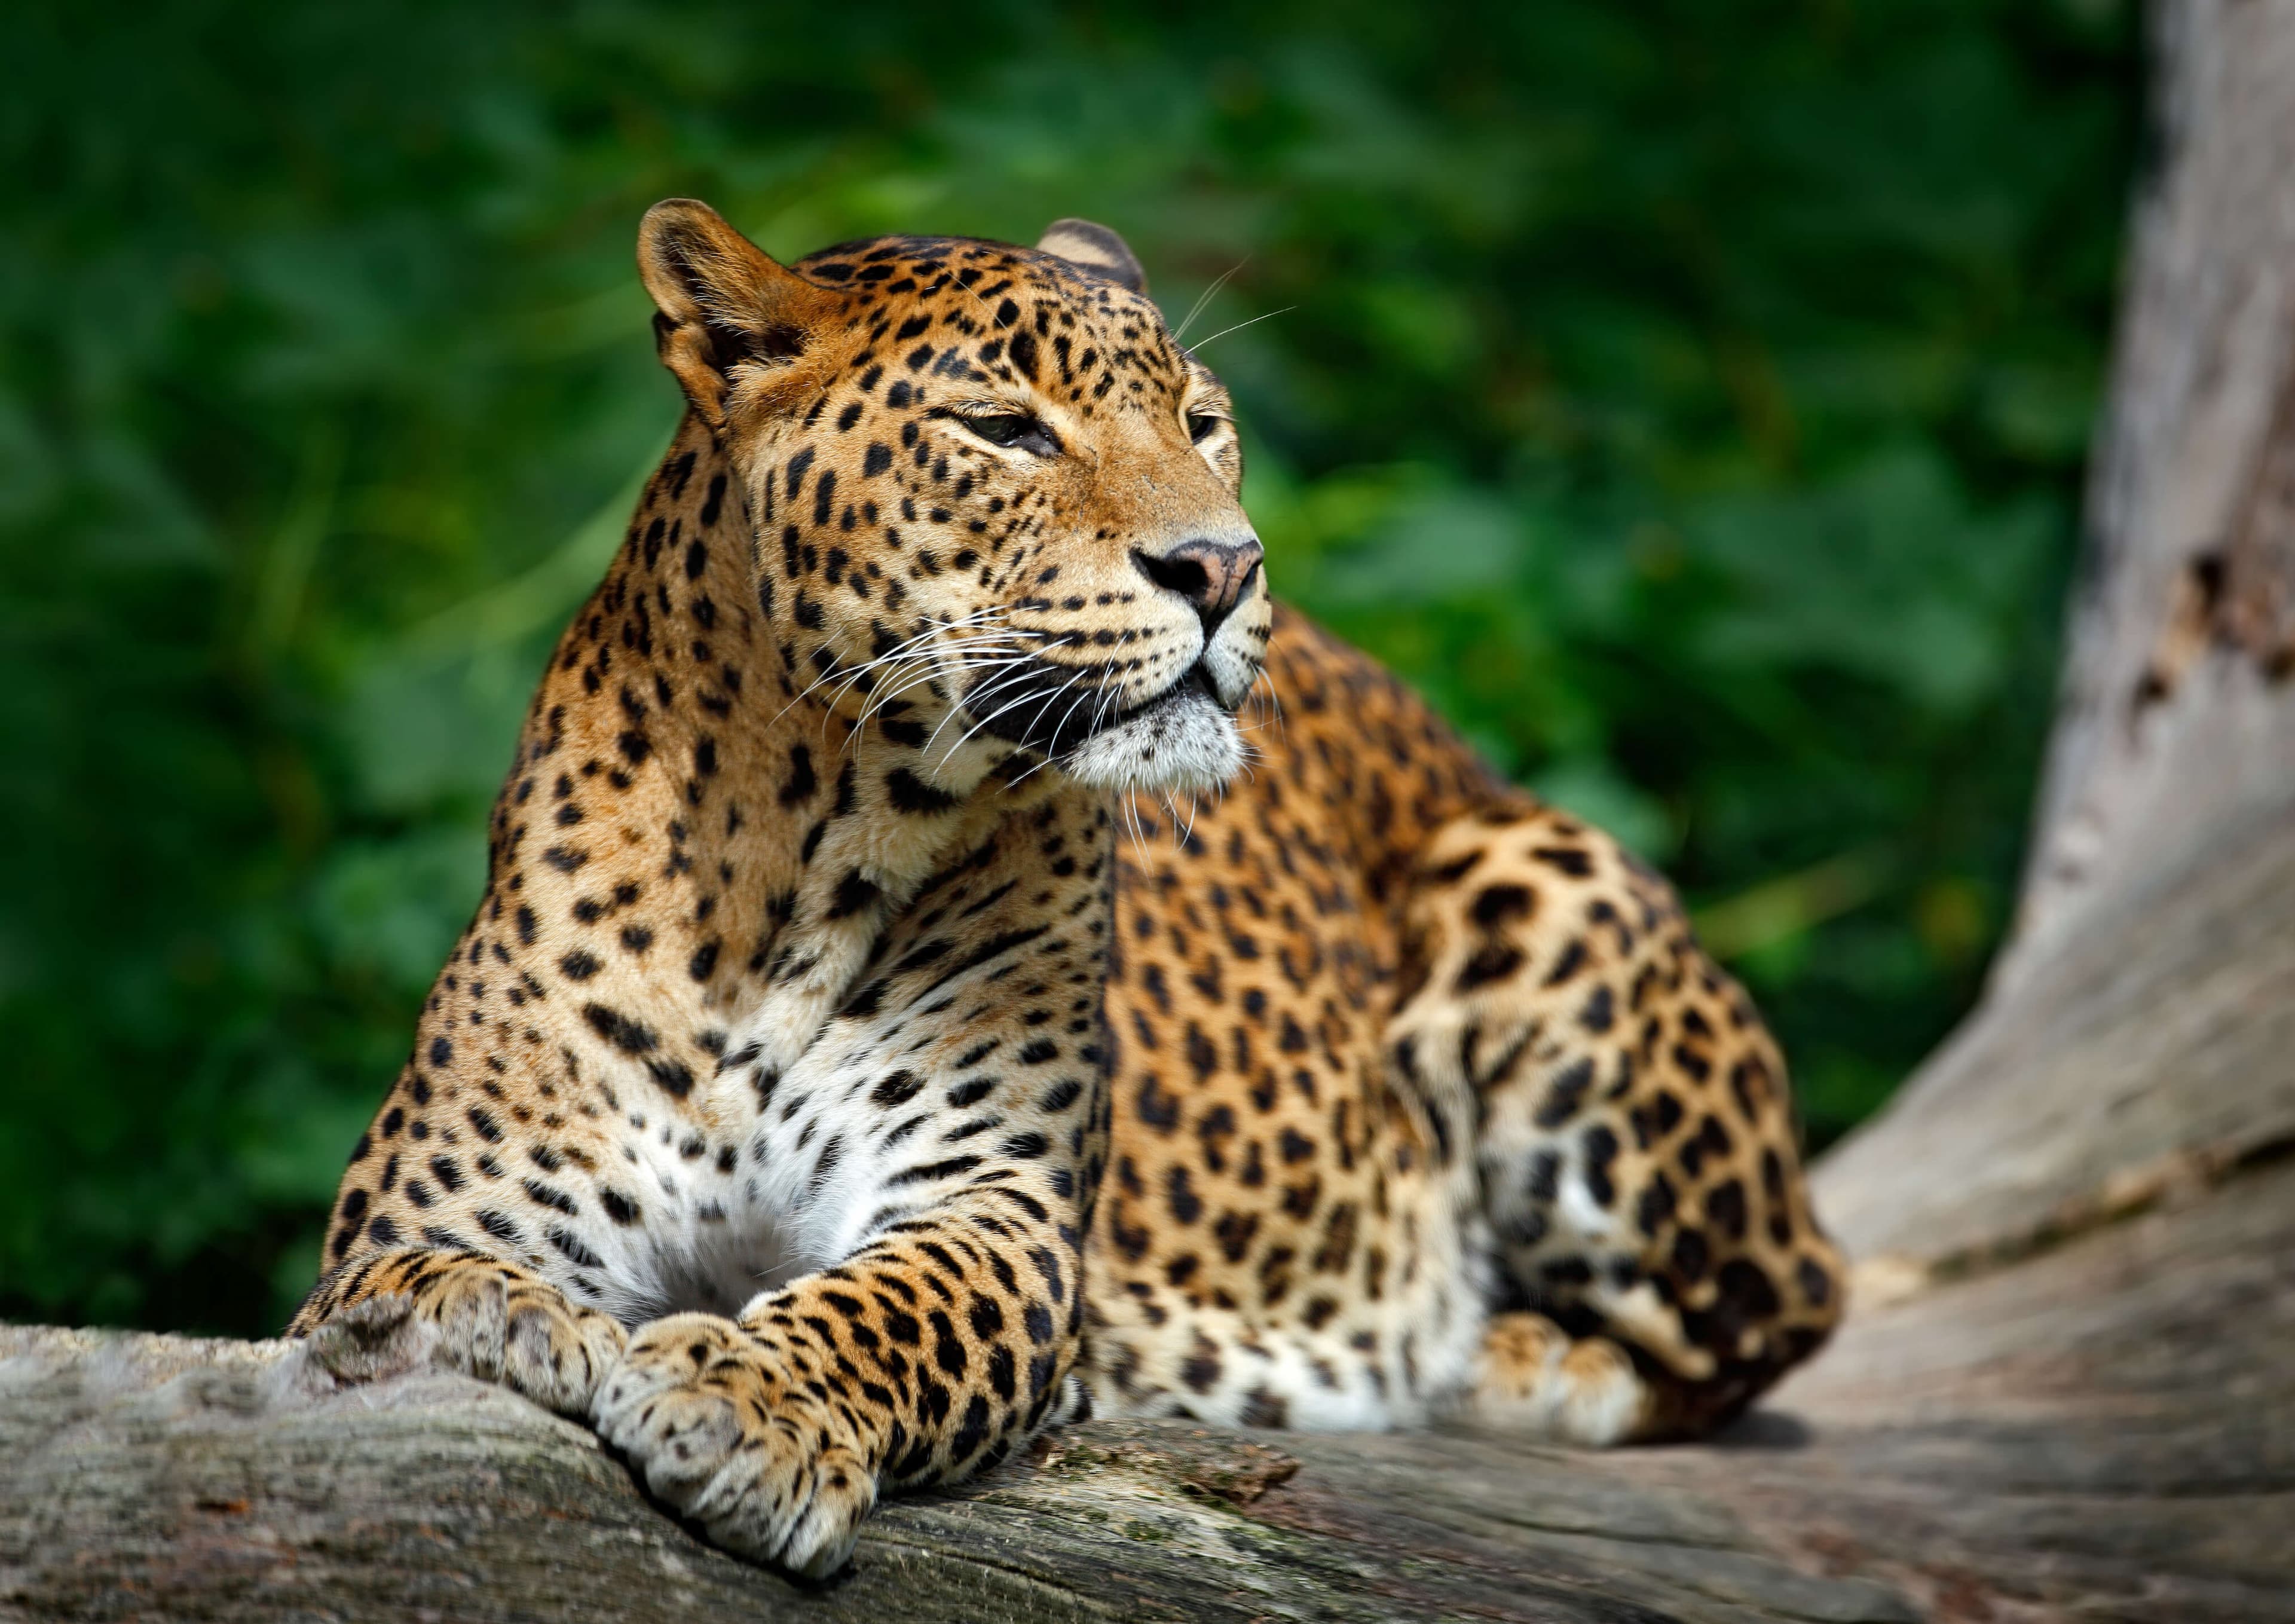 Sri Lankan leopard spotted in the nature habitat, Yala national park, Sri Lanka.